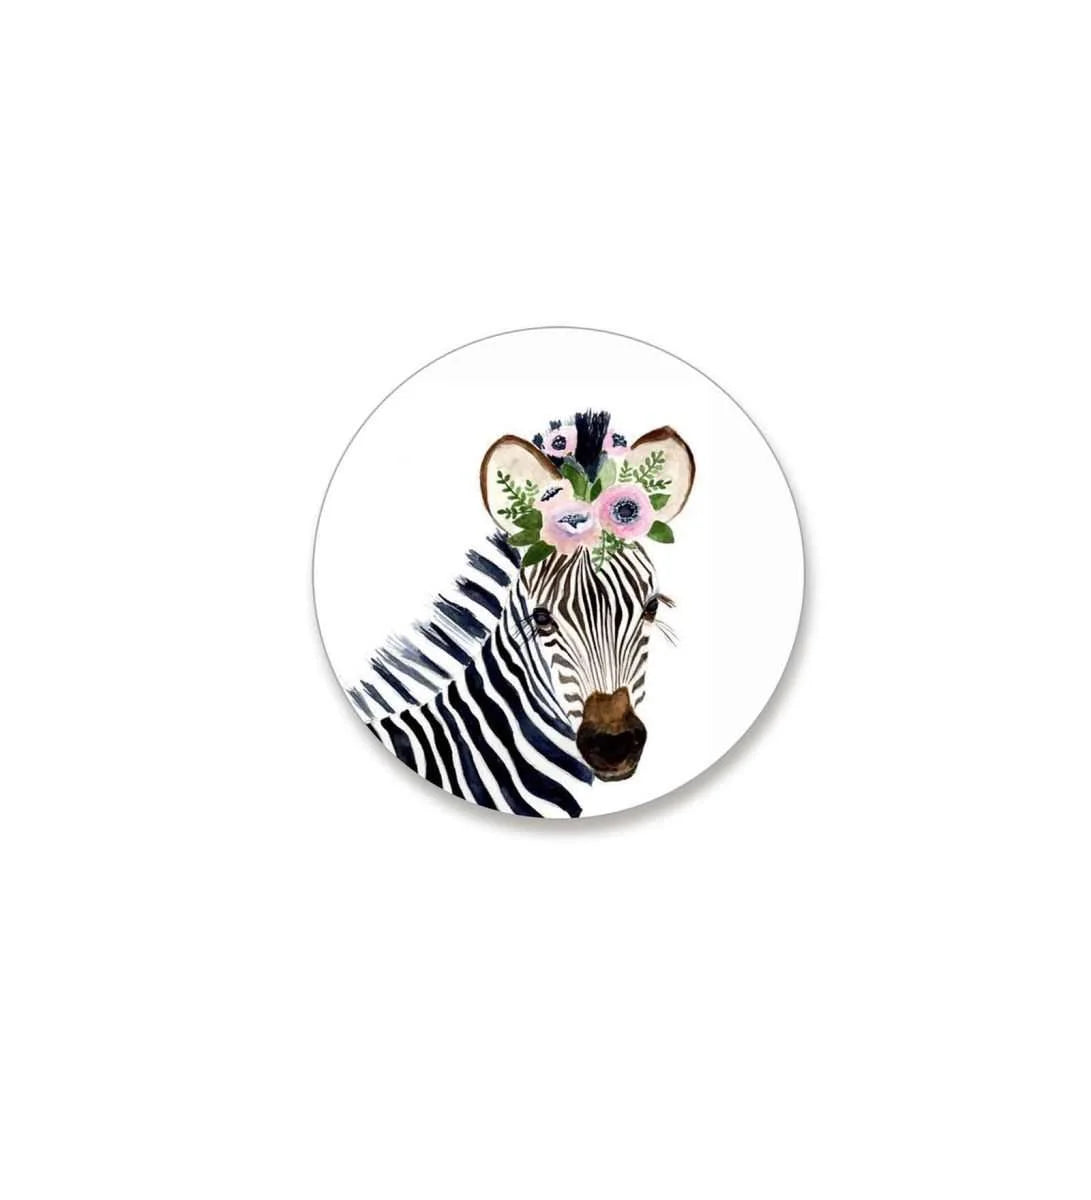 Cute animal Faces Wall Plate- Zebra | RWA 030